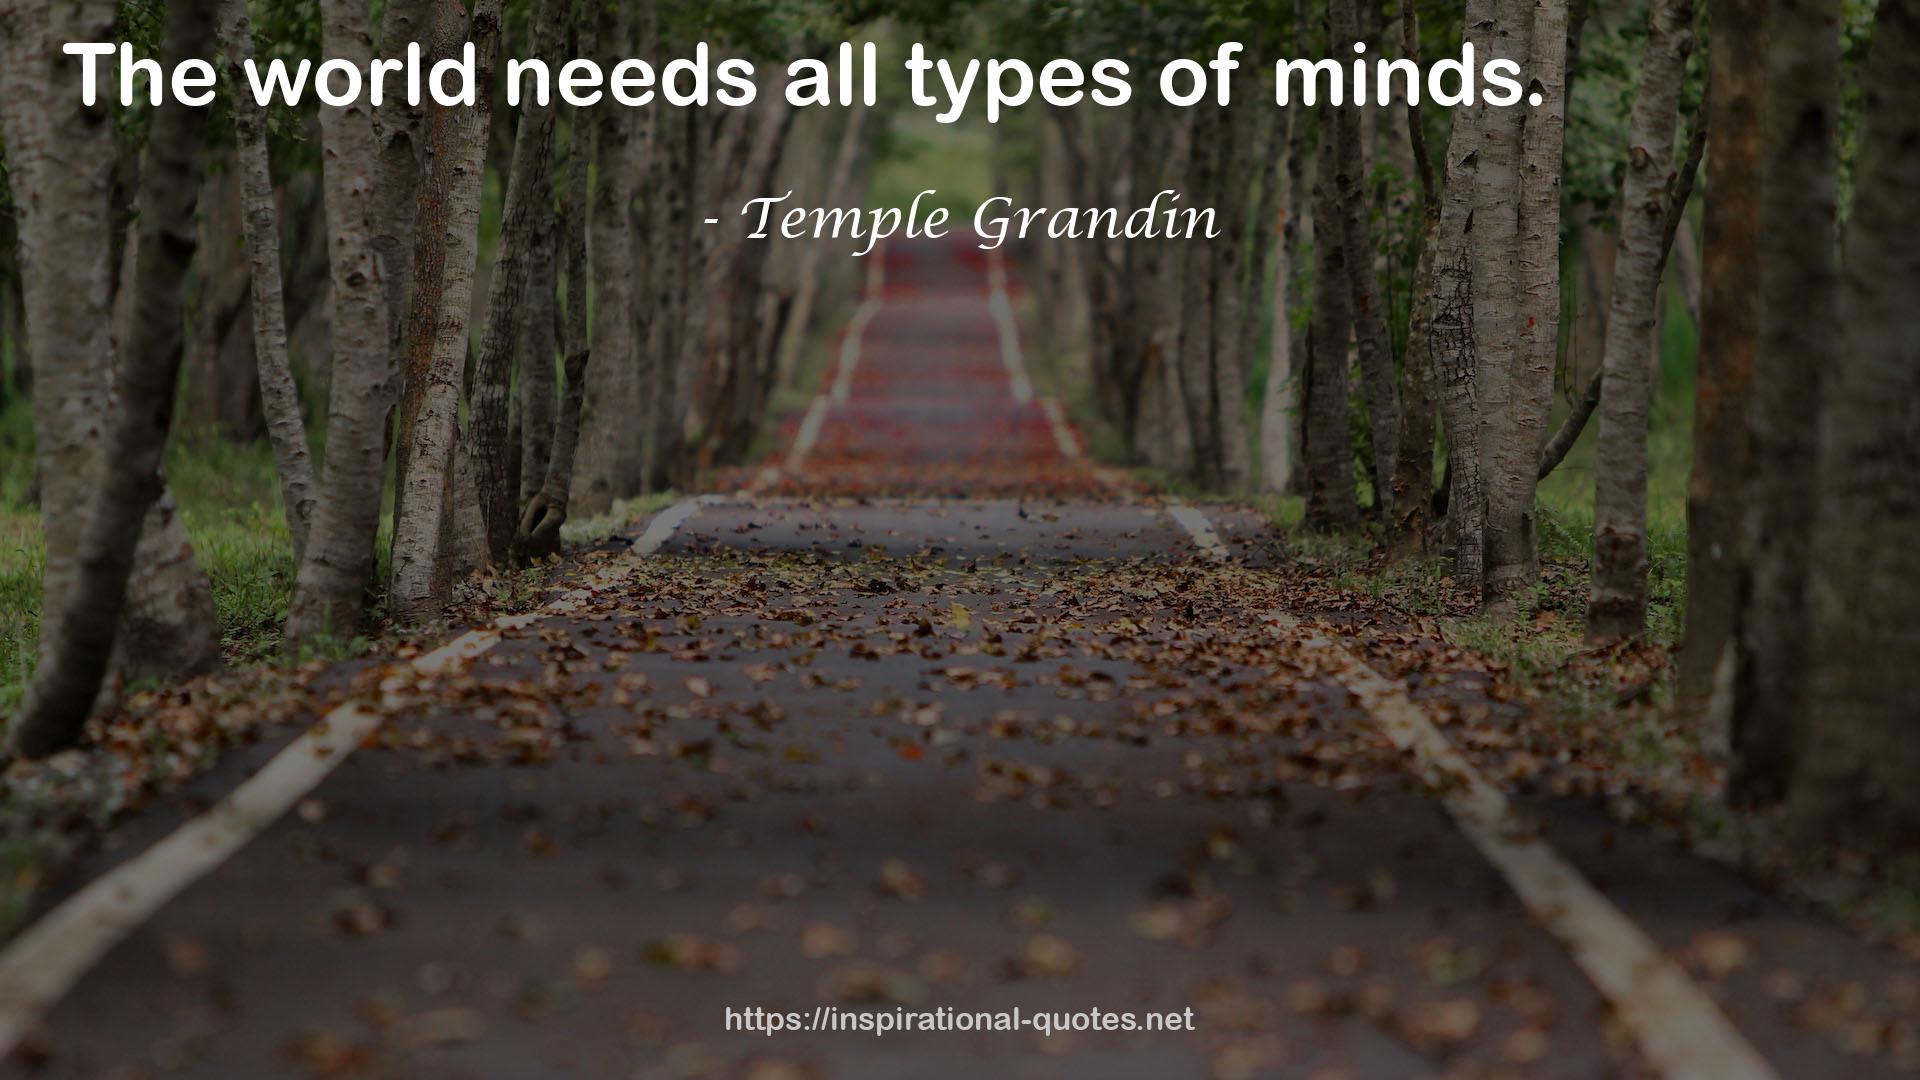 Temple Grandin QUOTES